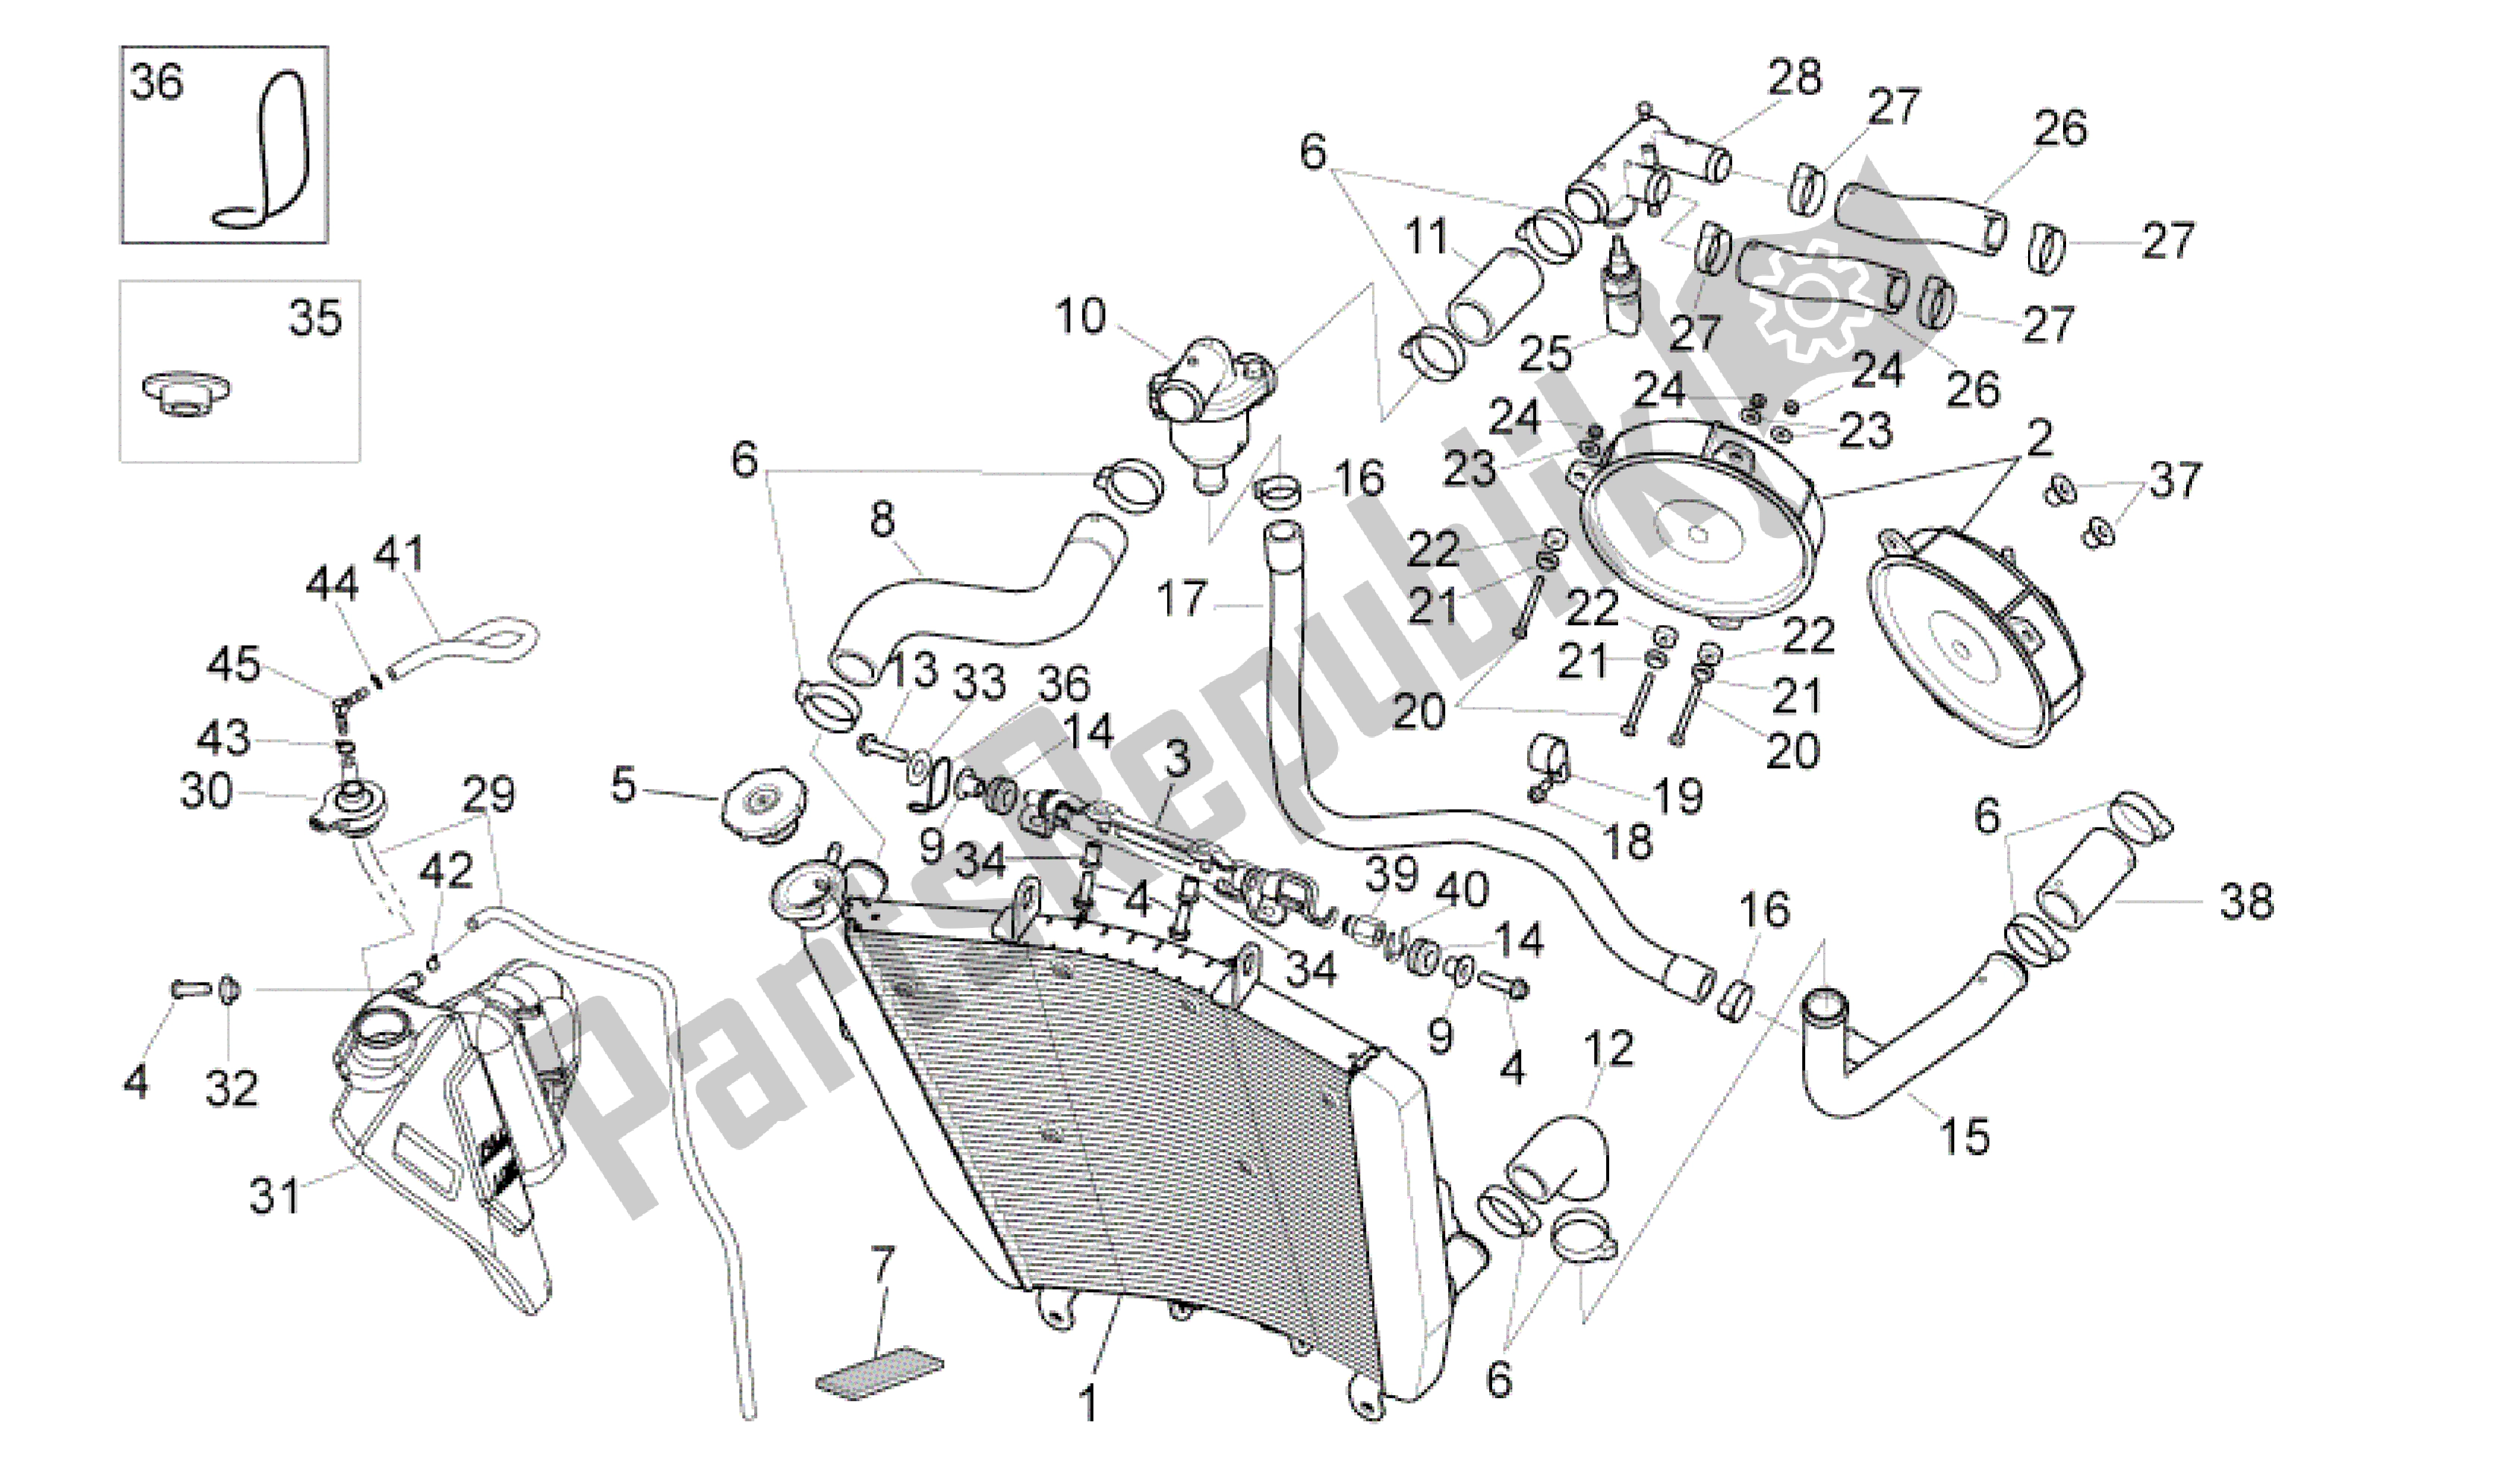 All parts for the Sistema De Refrigeración of the Aprilia RSV4 Tuono V4 R Aprc 1000 2011